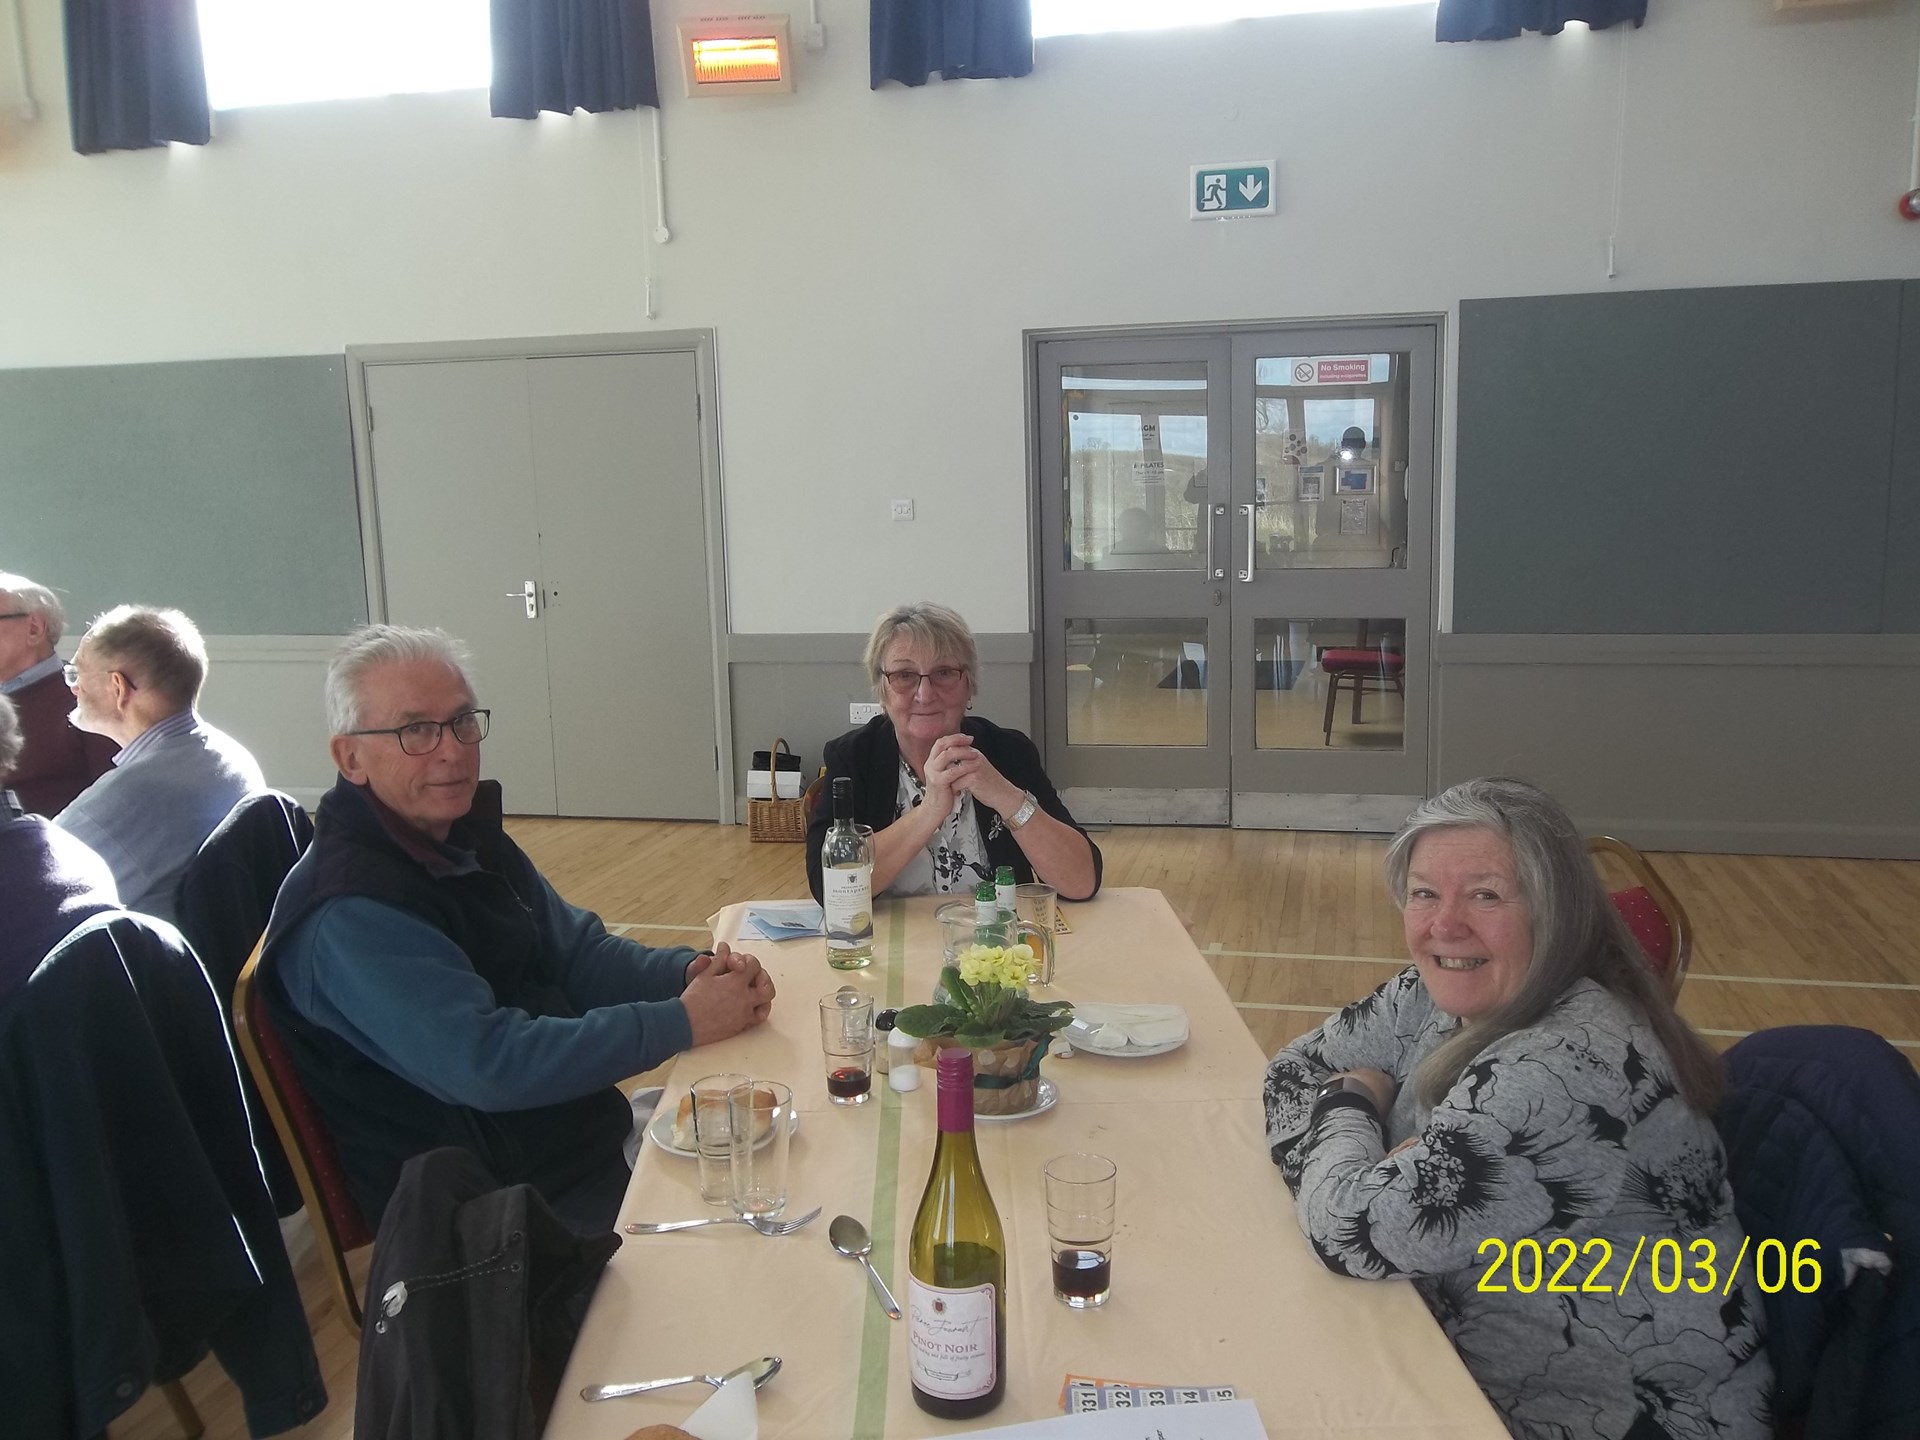 Belvoir Vale Bowls Club Sunday Lunch 2022